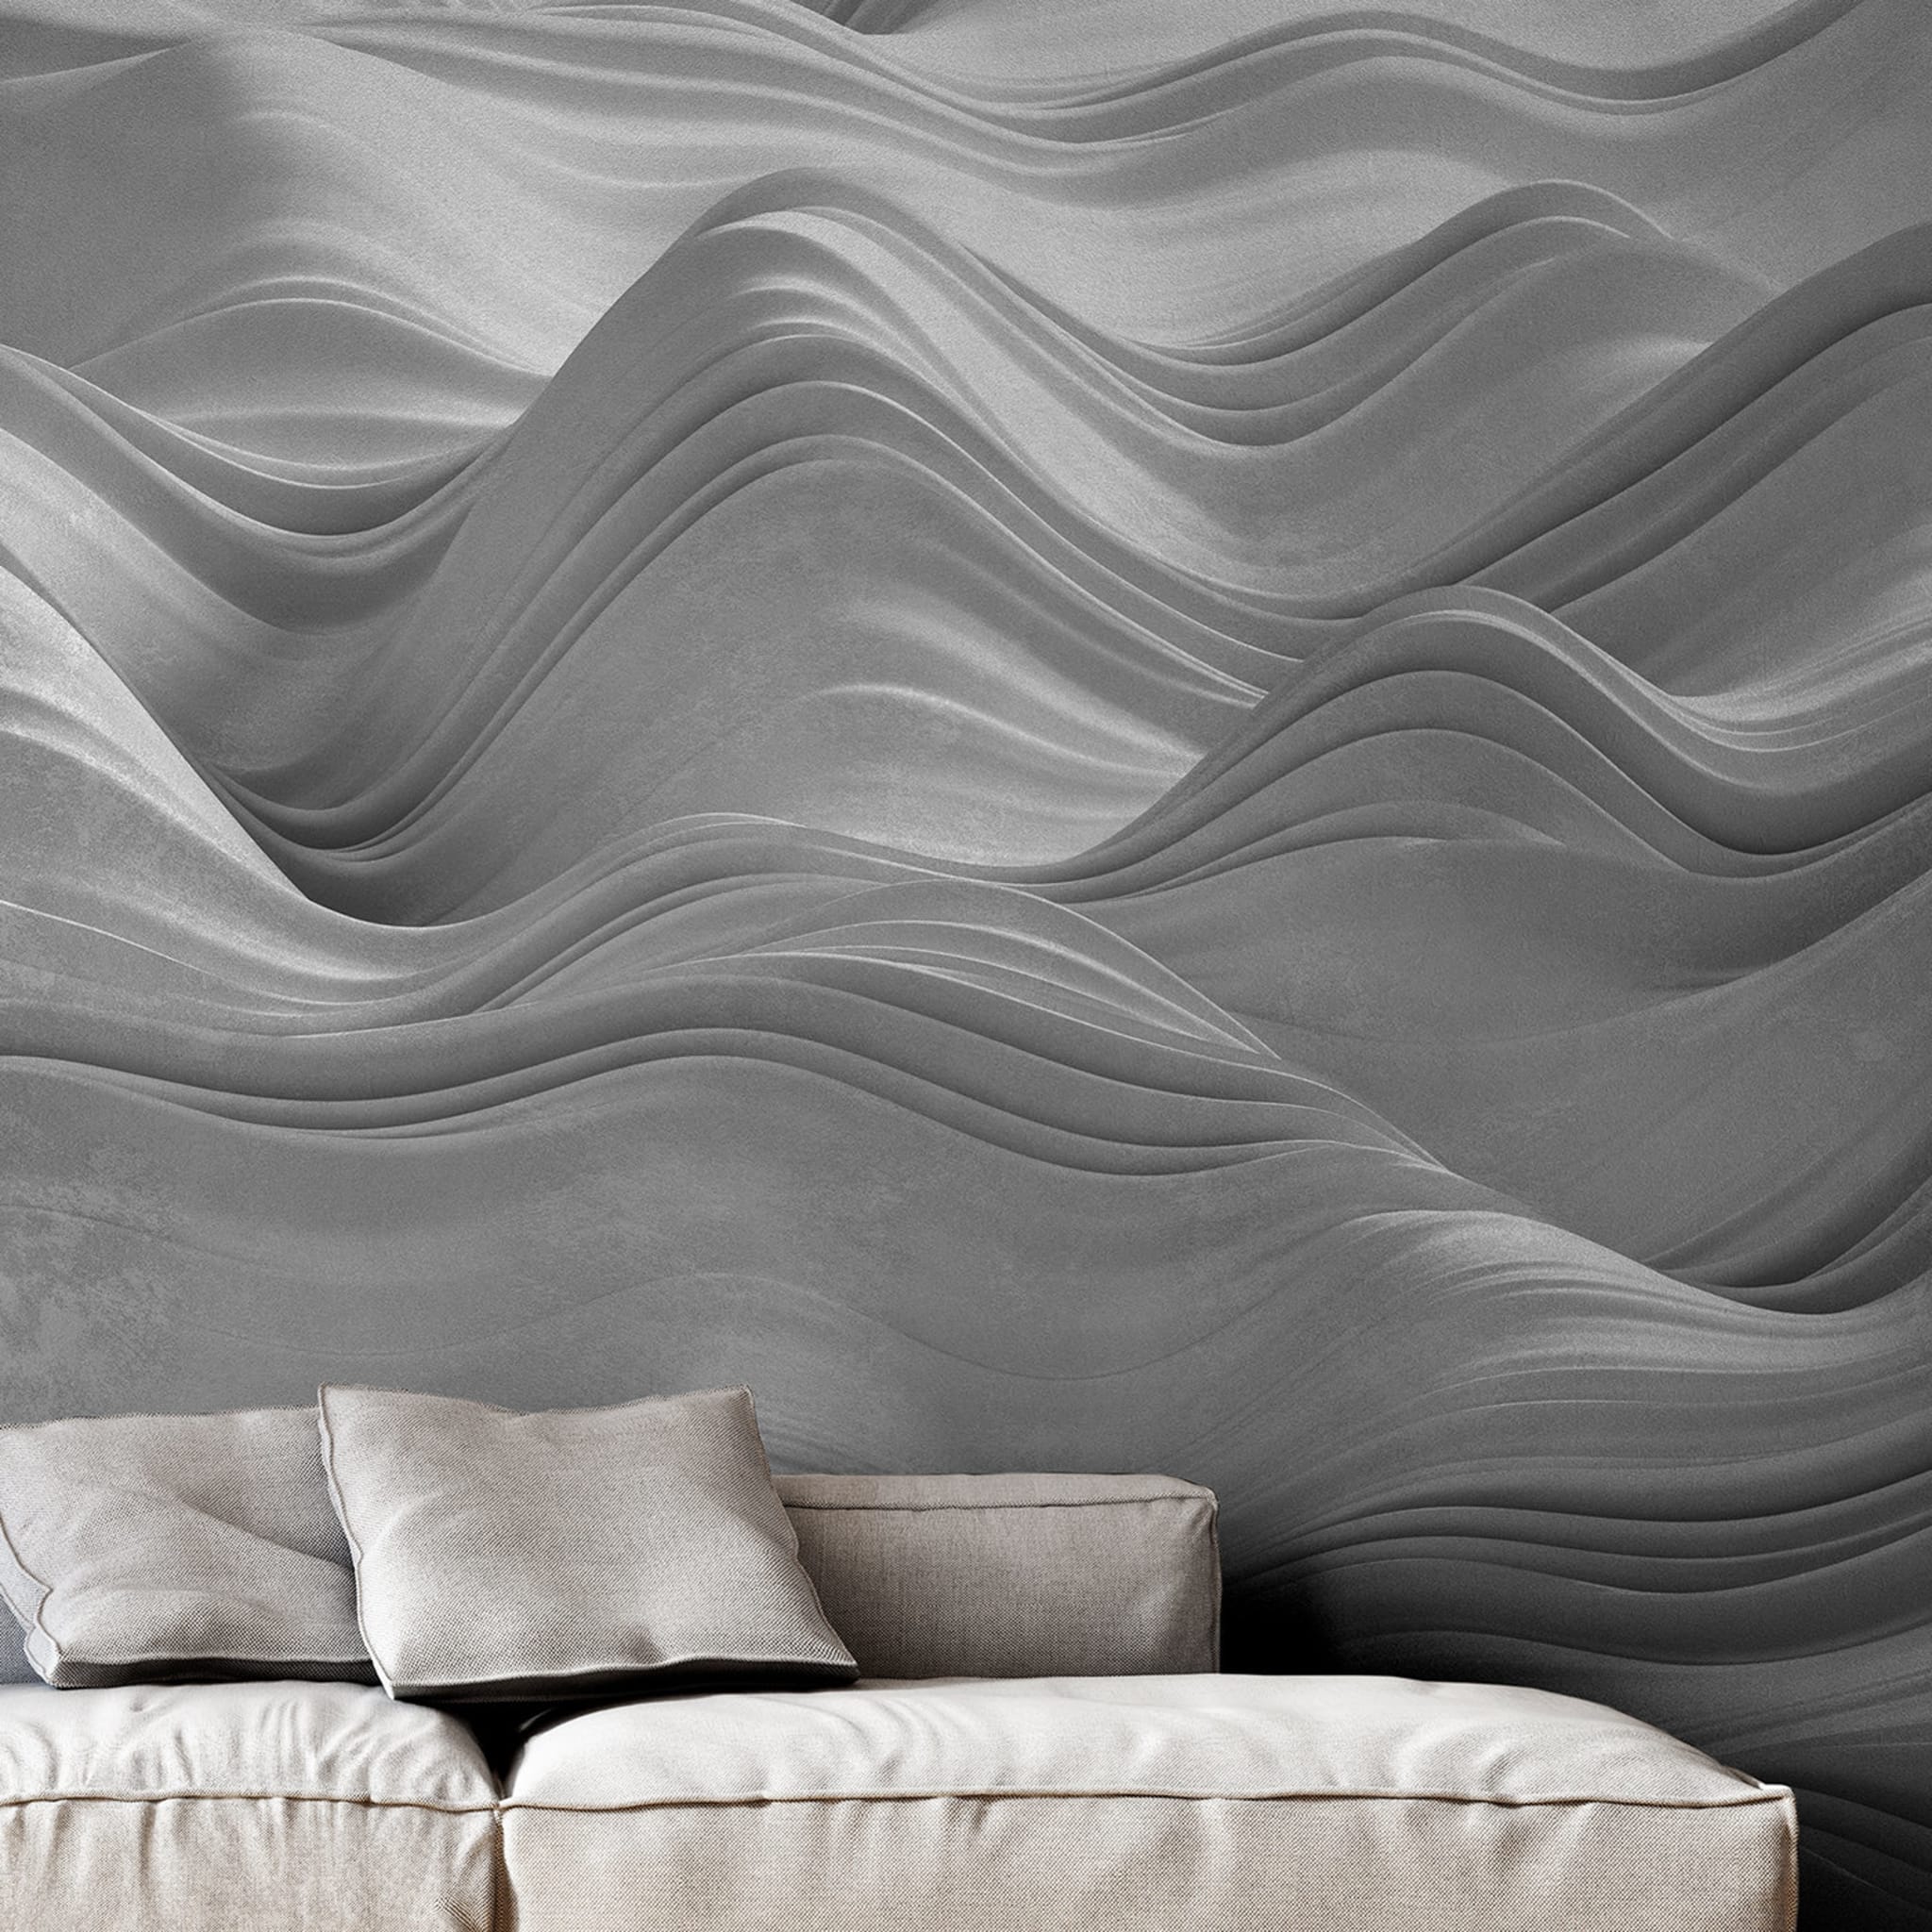 Waves Textured Wallpaper - Alternative view 1